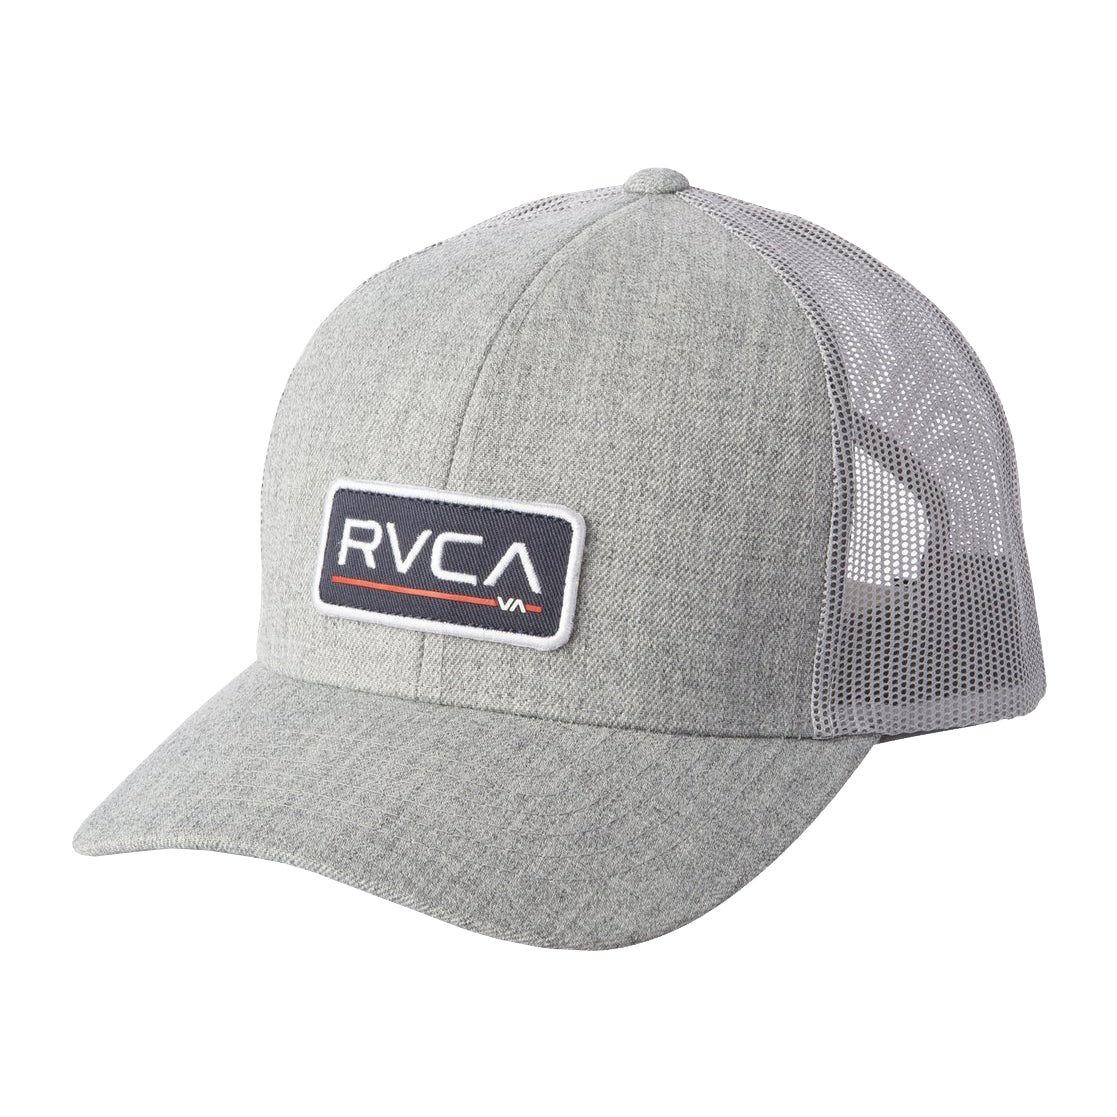 RVCA Boys Ticket Trucker Hat HGR OS